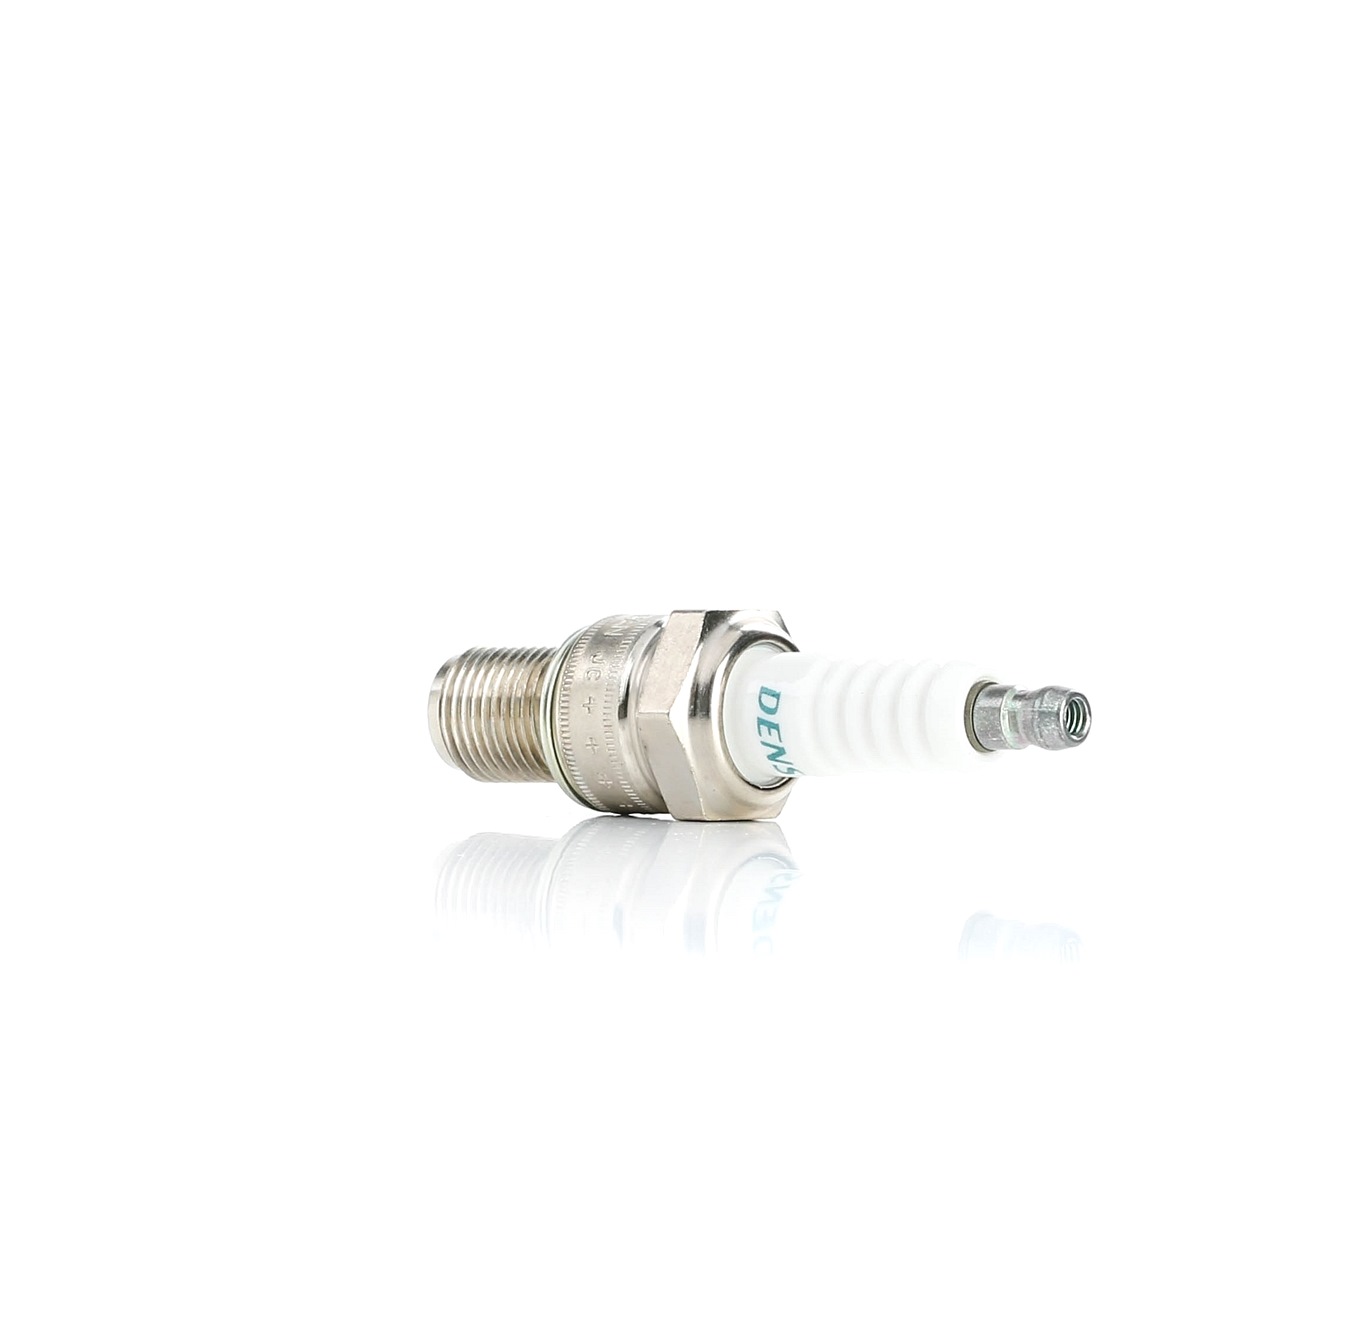 Buy cheap OEM parts: Spark Plug DENSO Iridium Power IW27